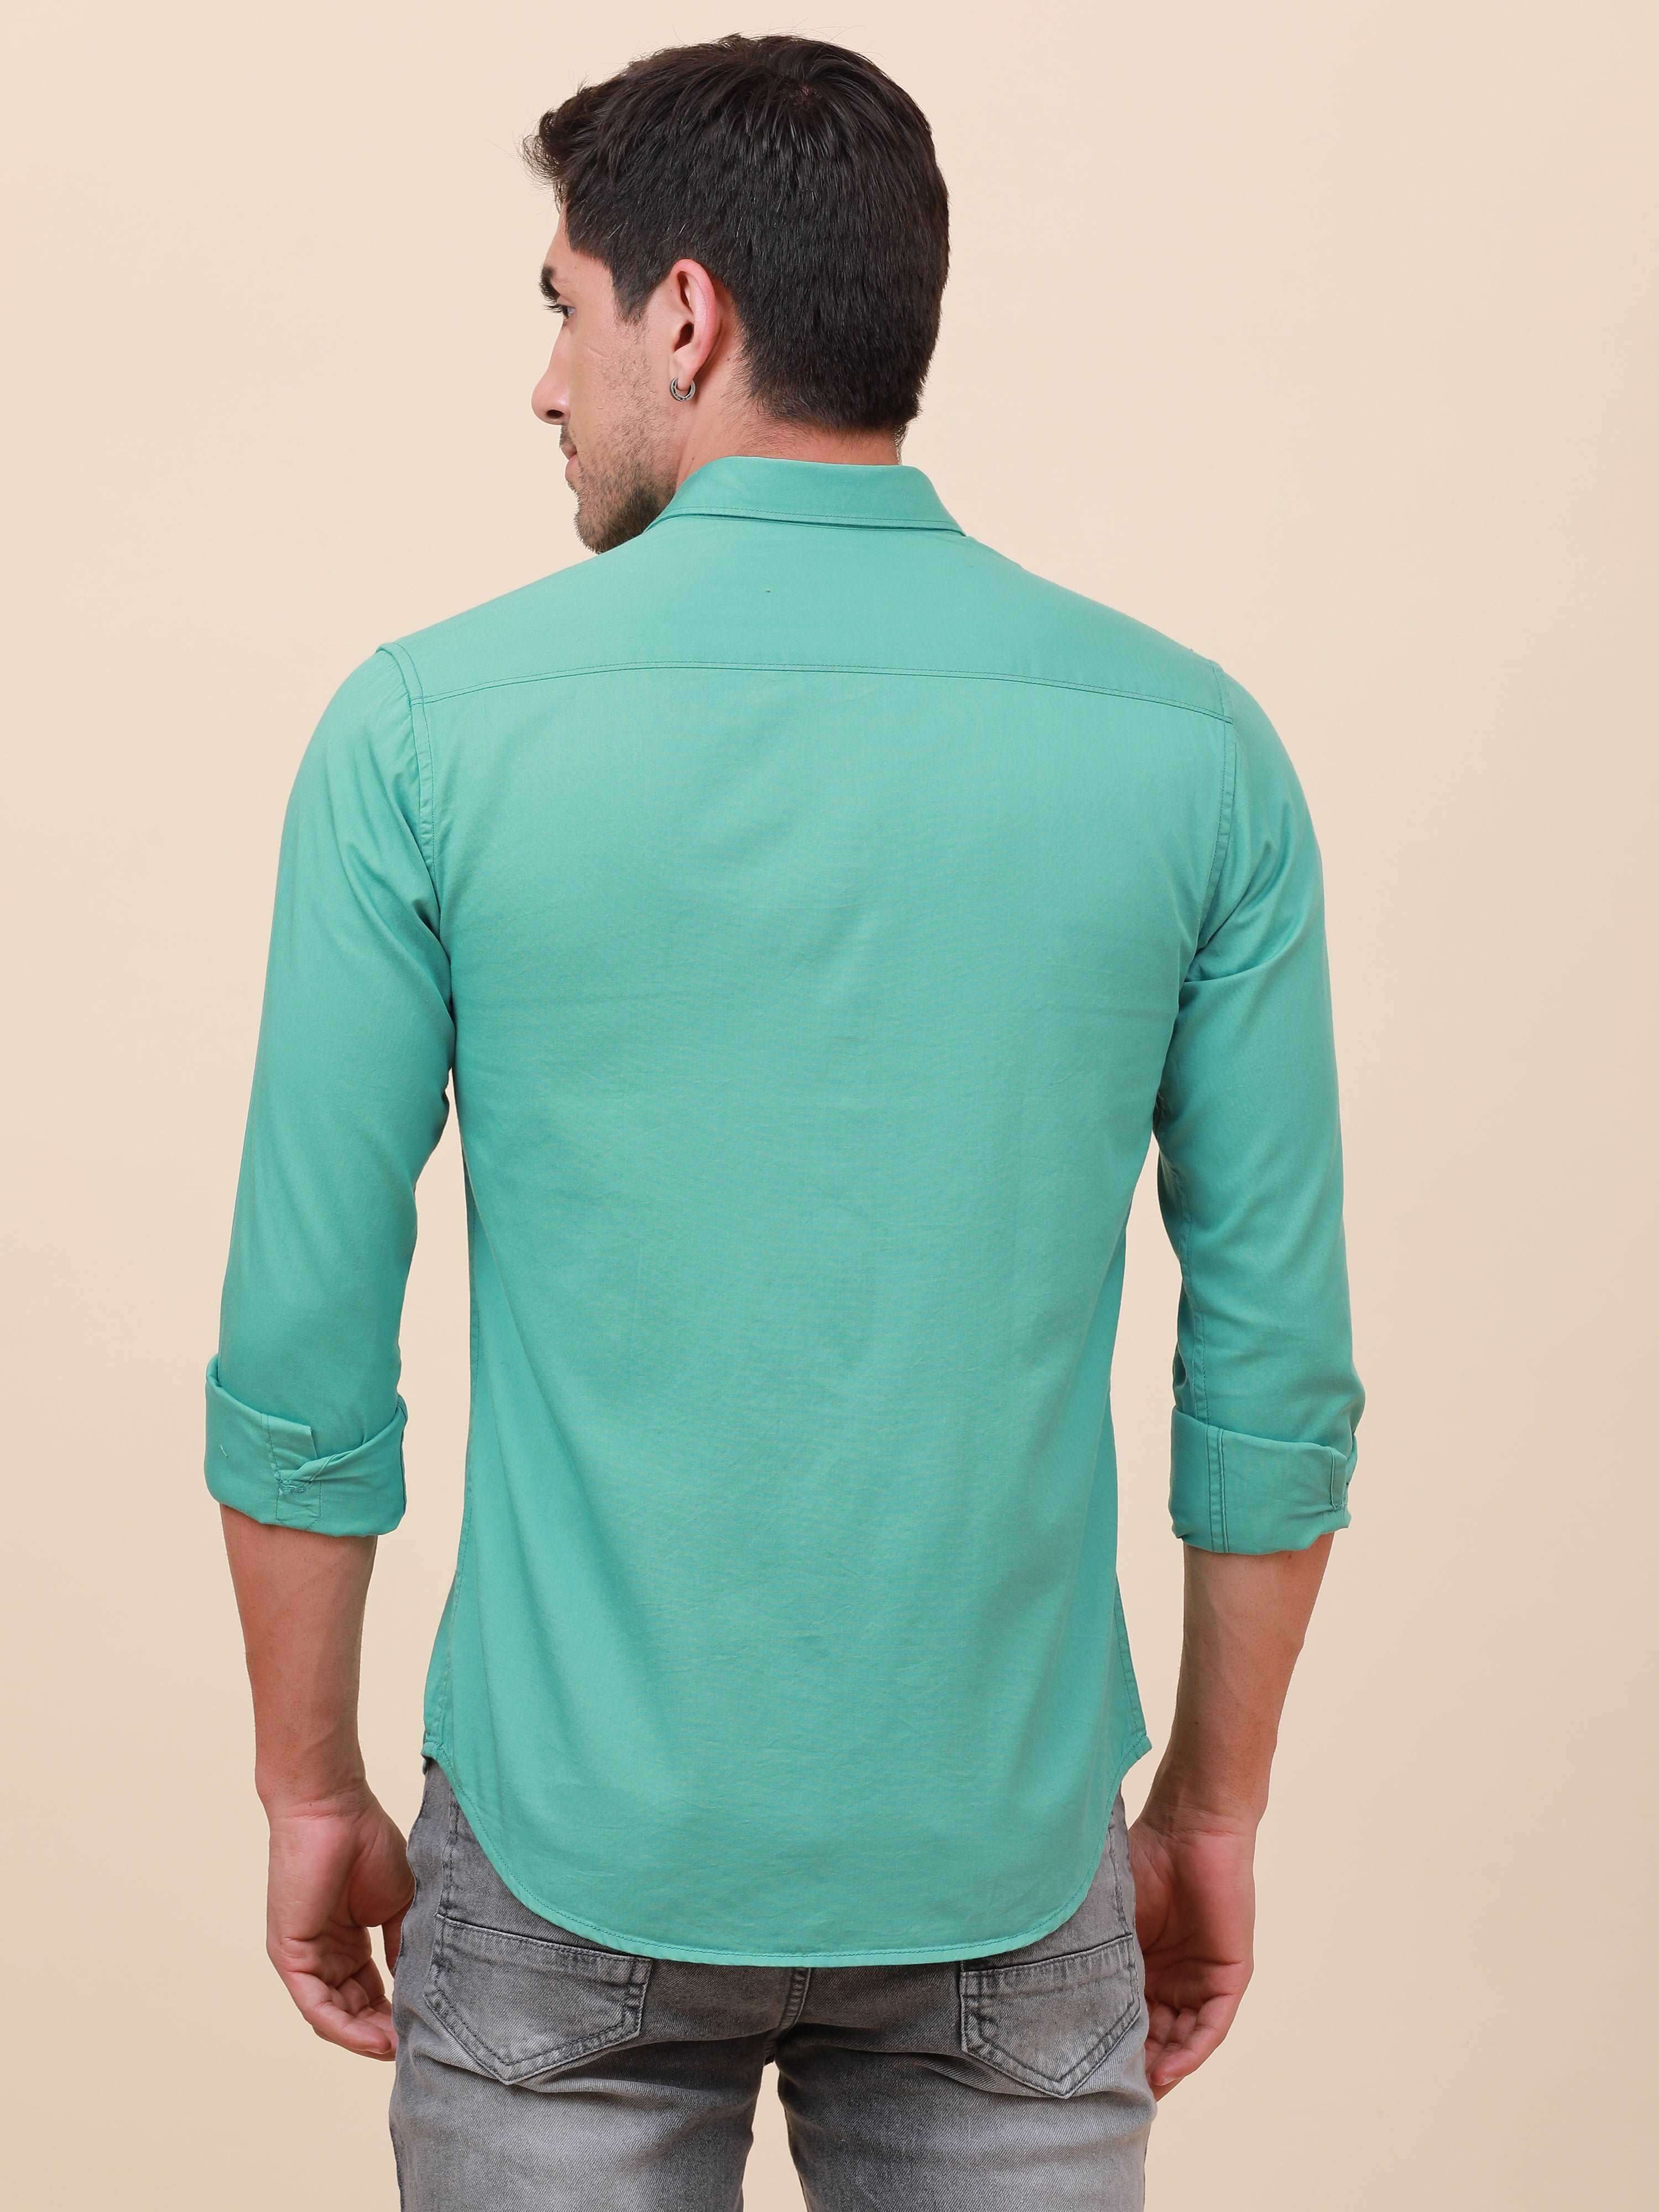 Aqua Marine Solid Single Pocket full sleeve Shirt